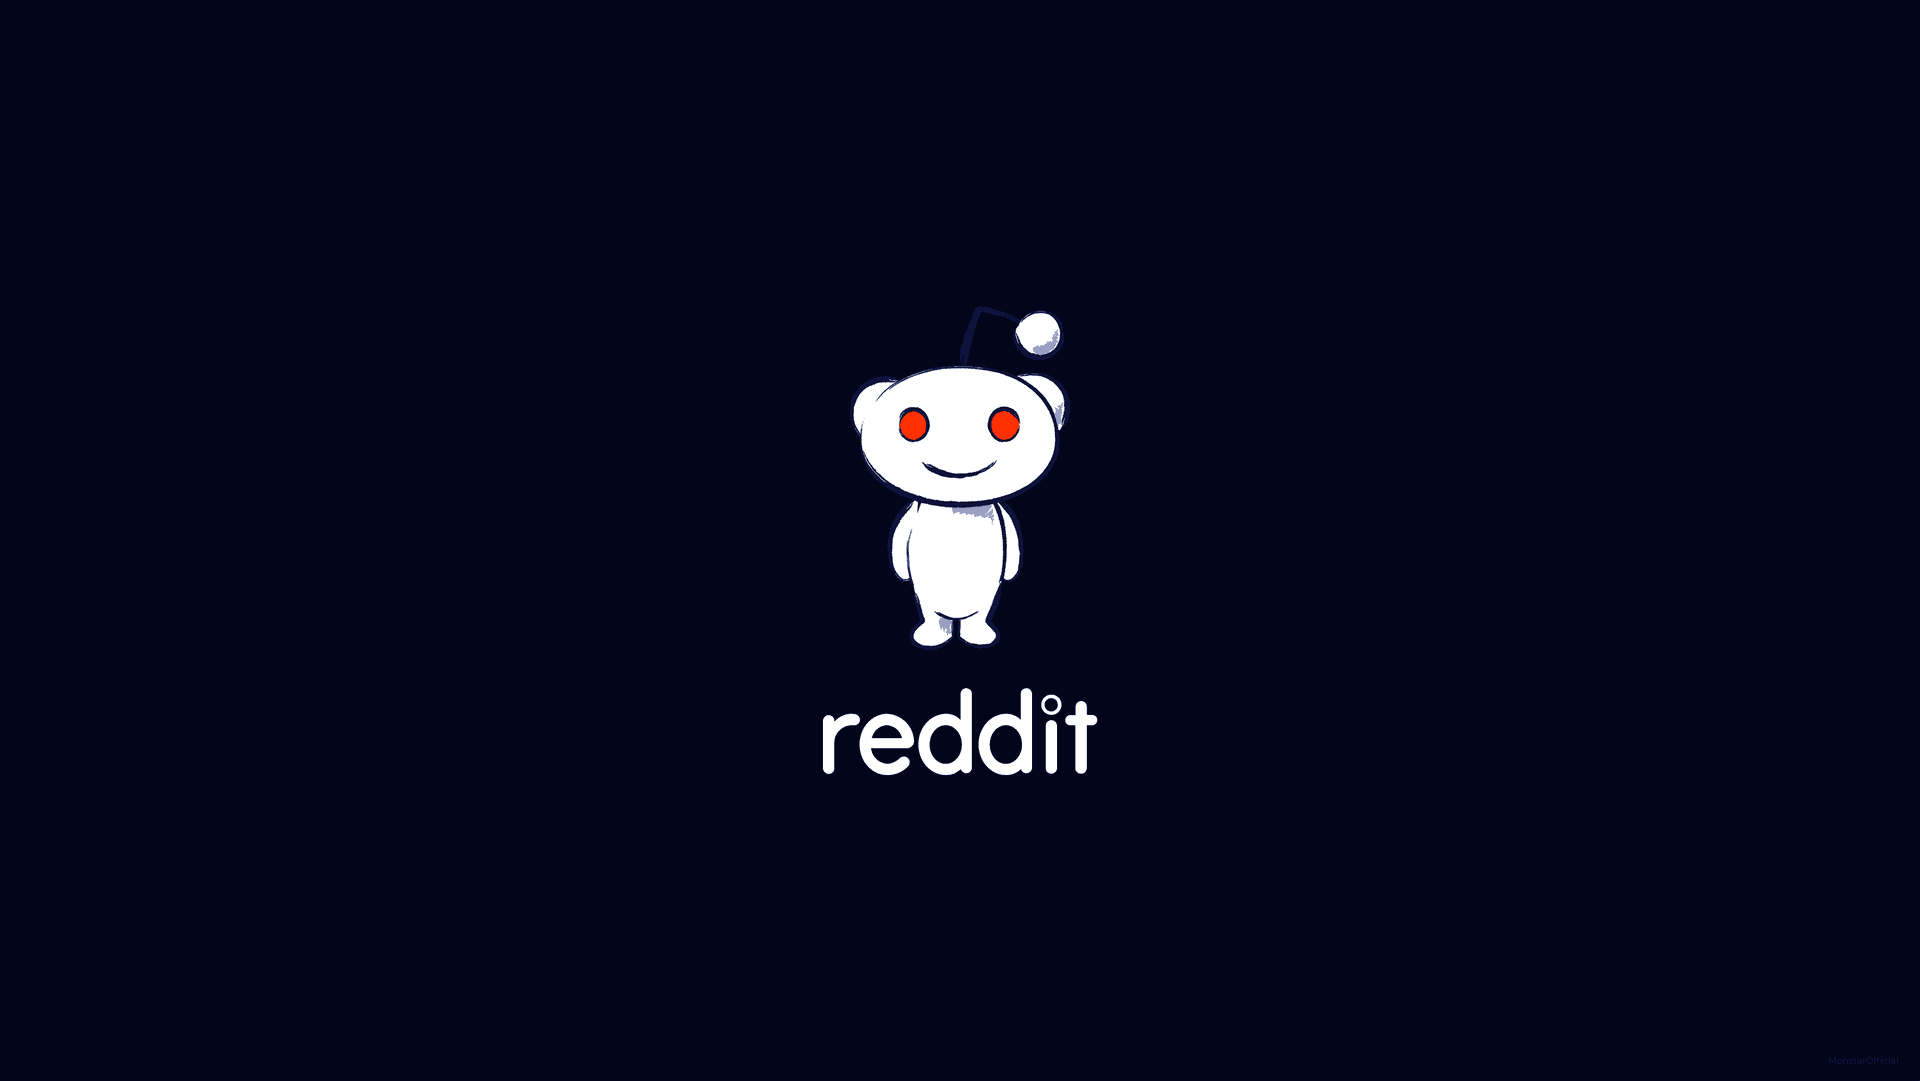 Plano De Fundo Do Reddit